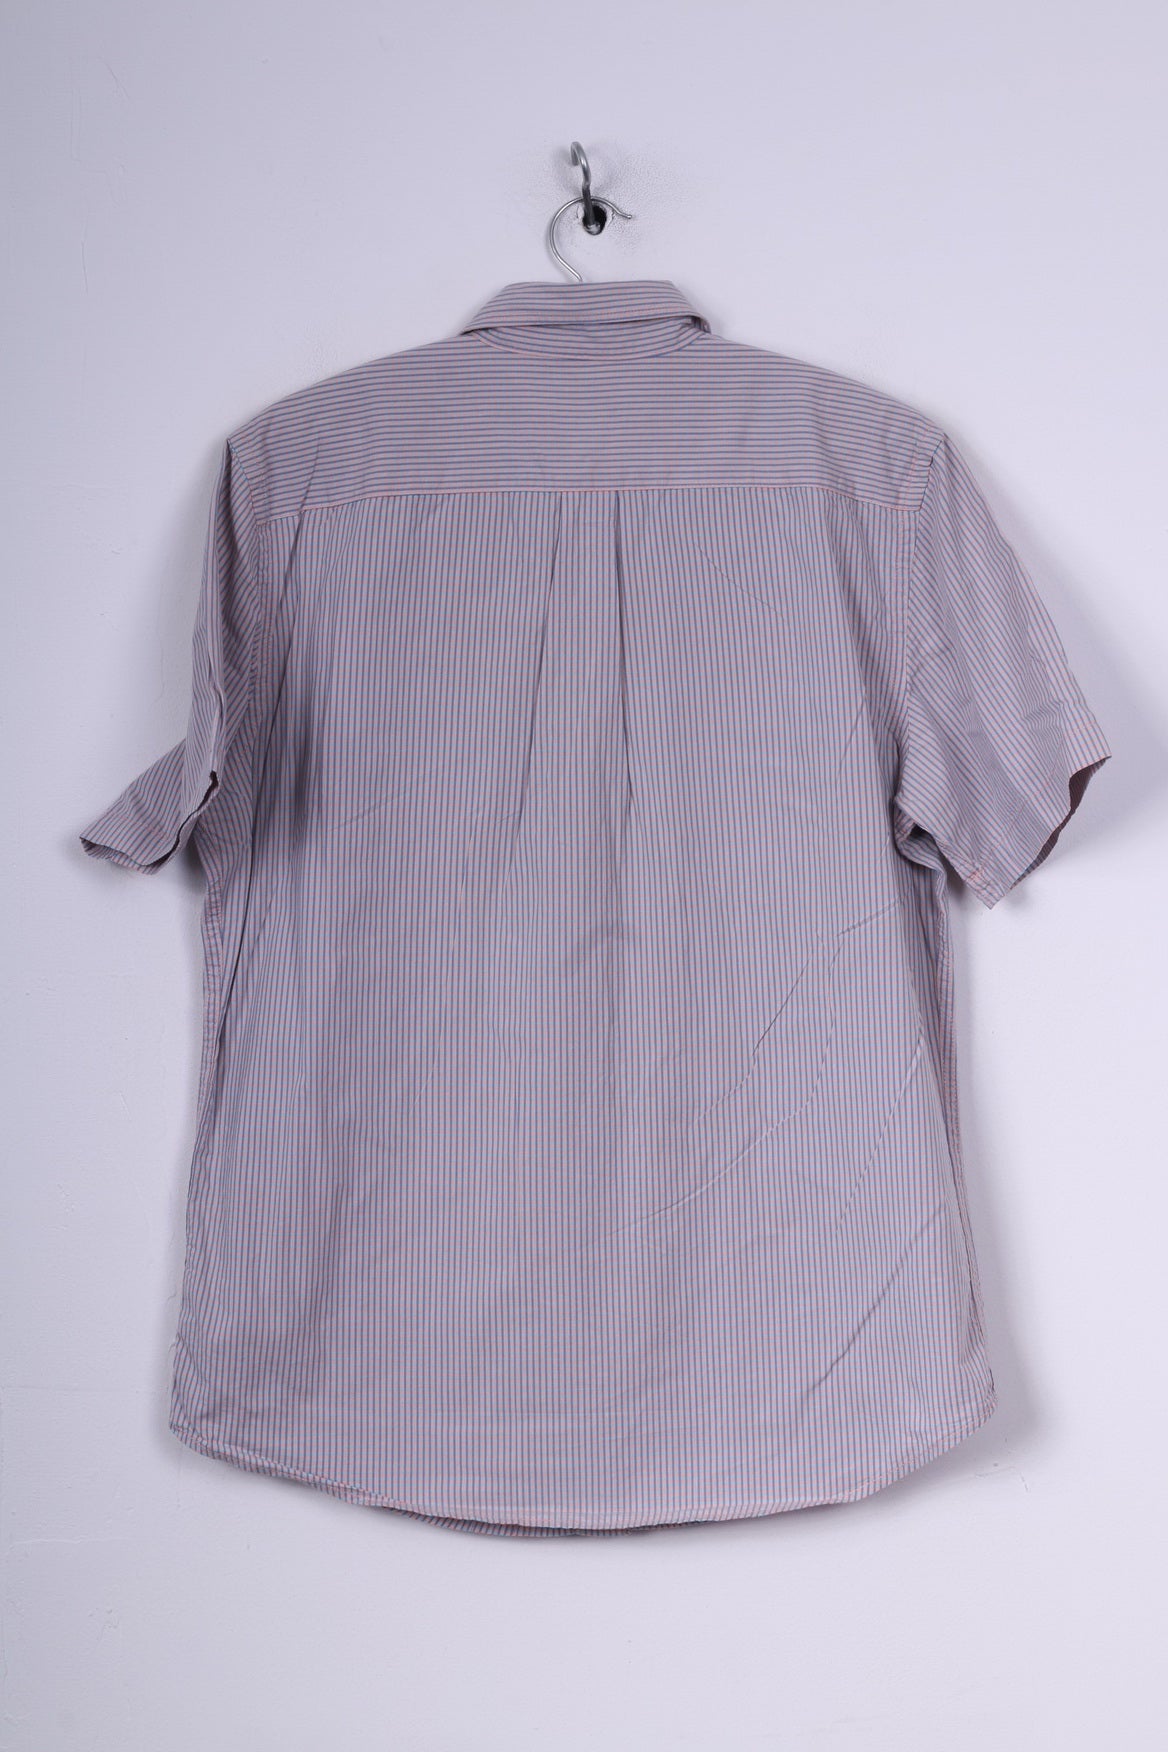 Gap Mens M Casual Shirt Short Sleeve Classic Fit Mini Check Tibtan Rose Summer Top